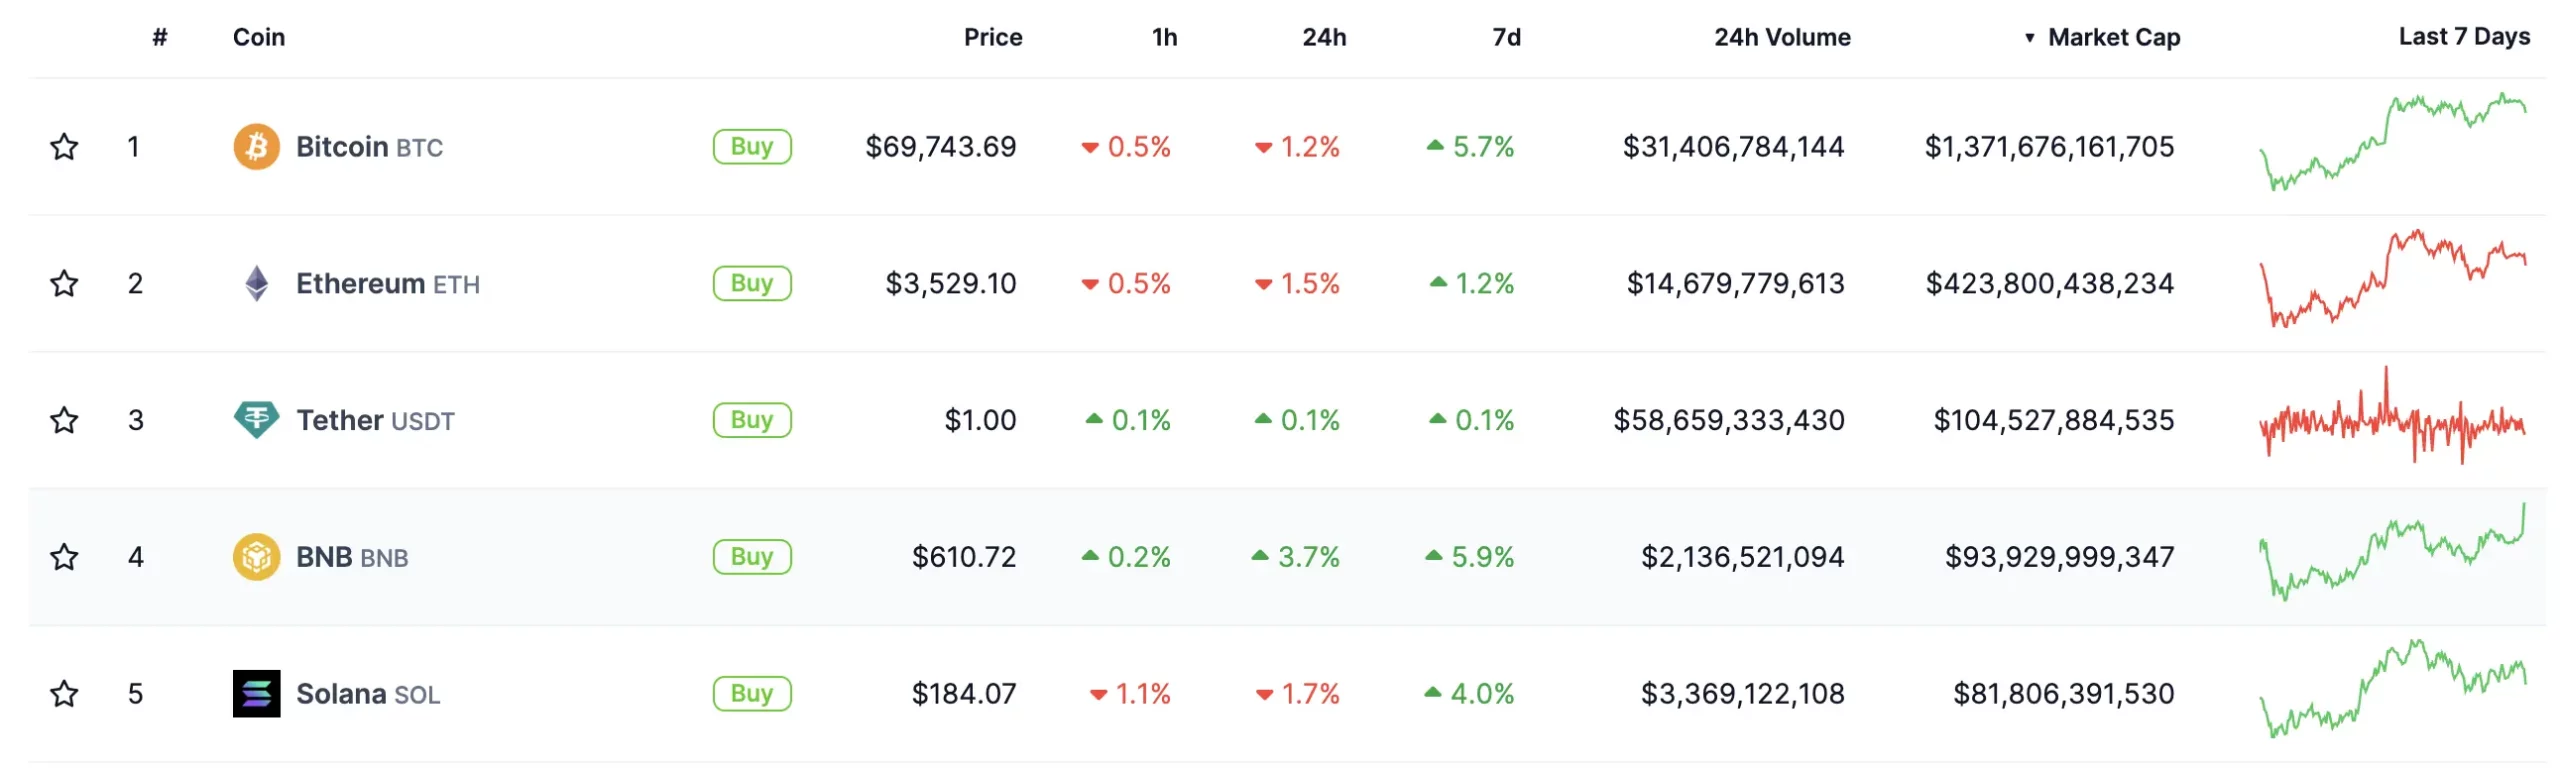 Top 5 Crypto by Market Cap